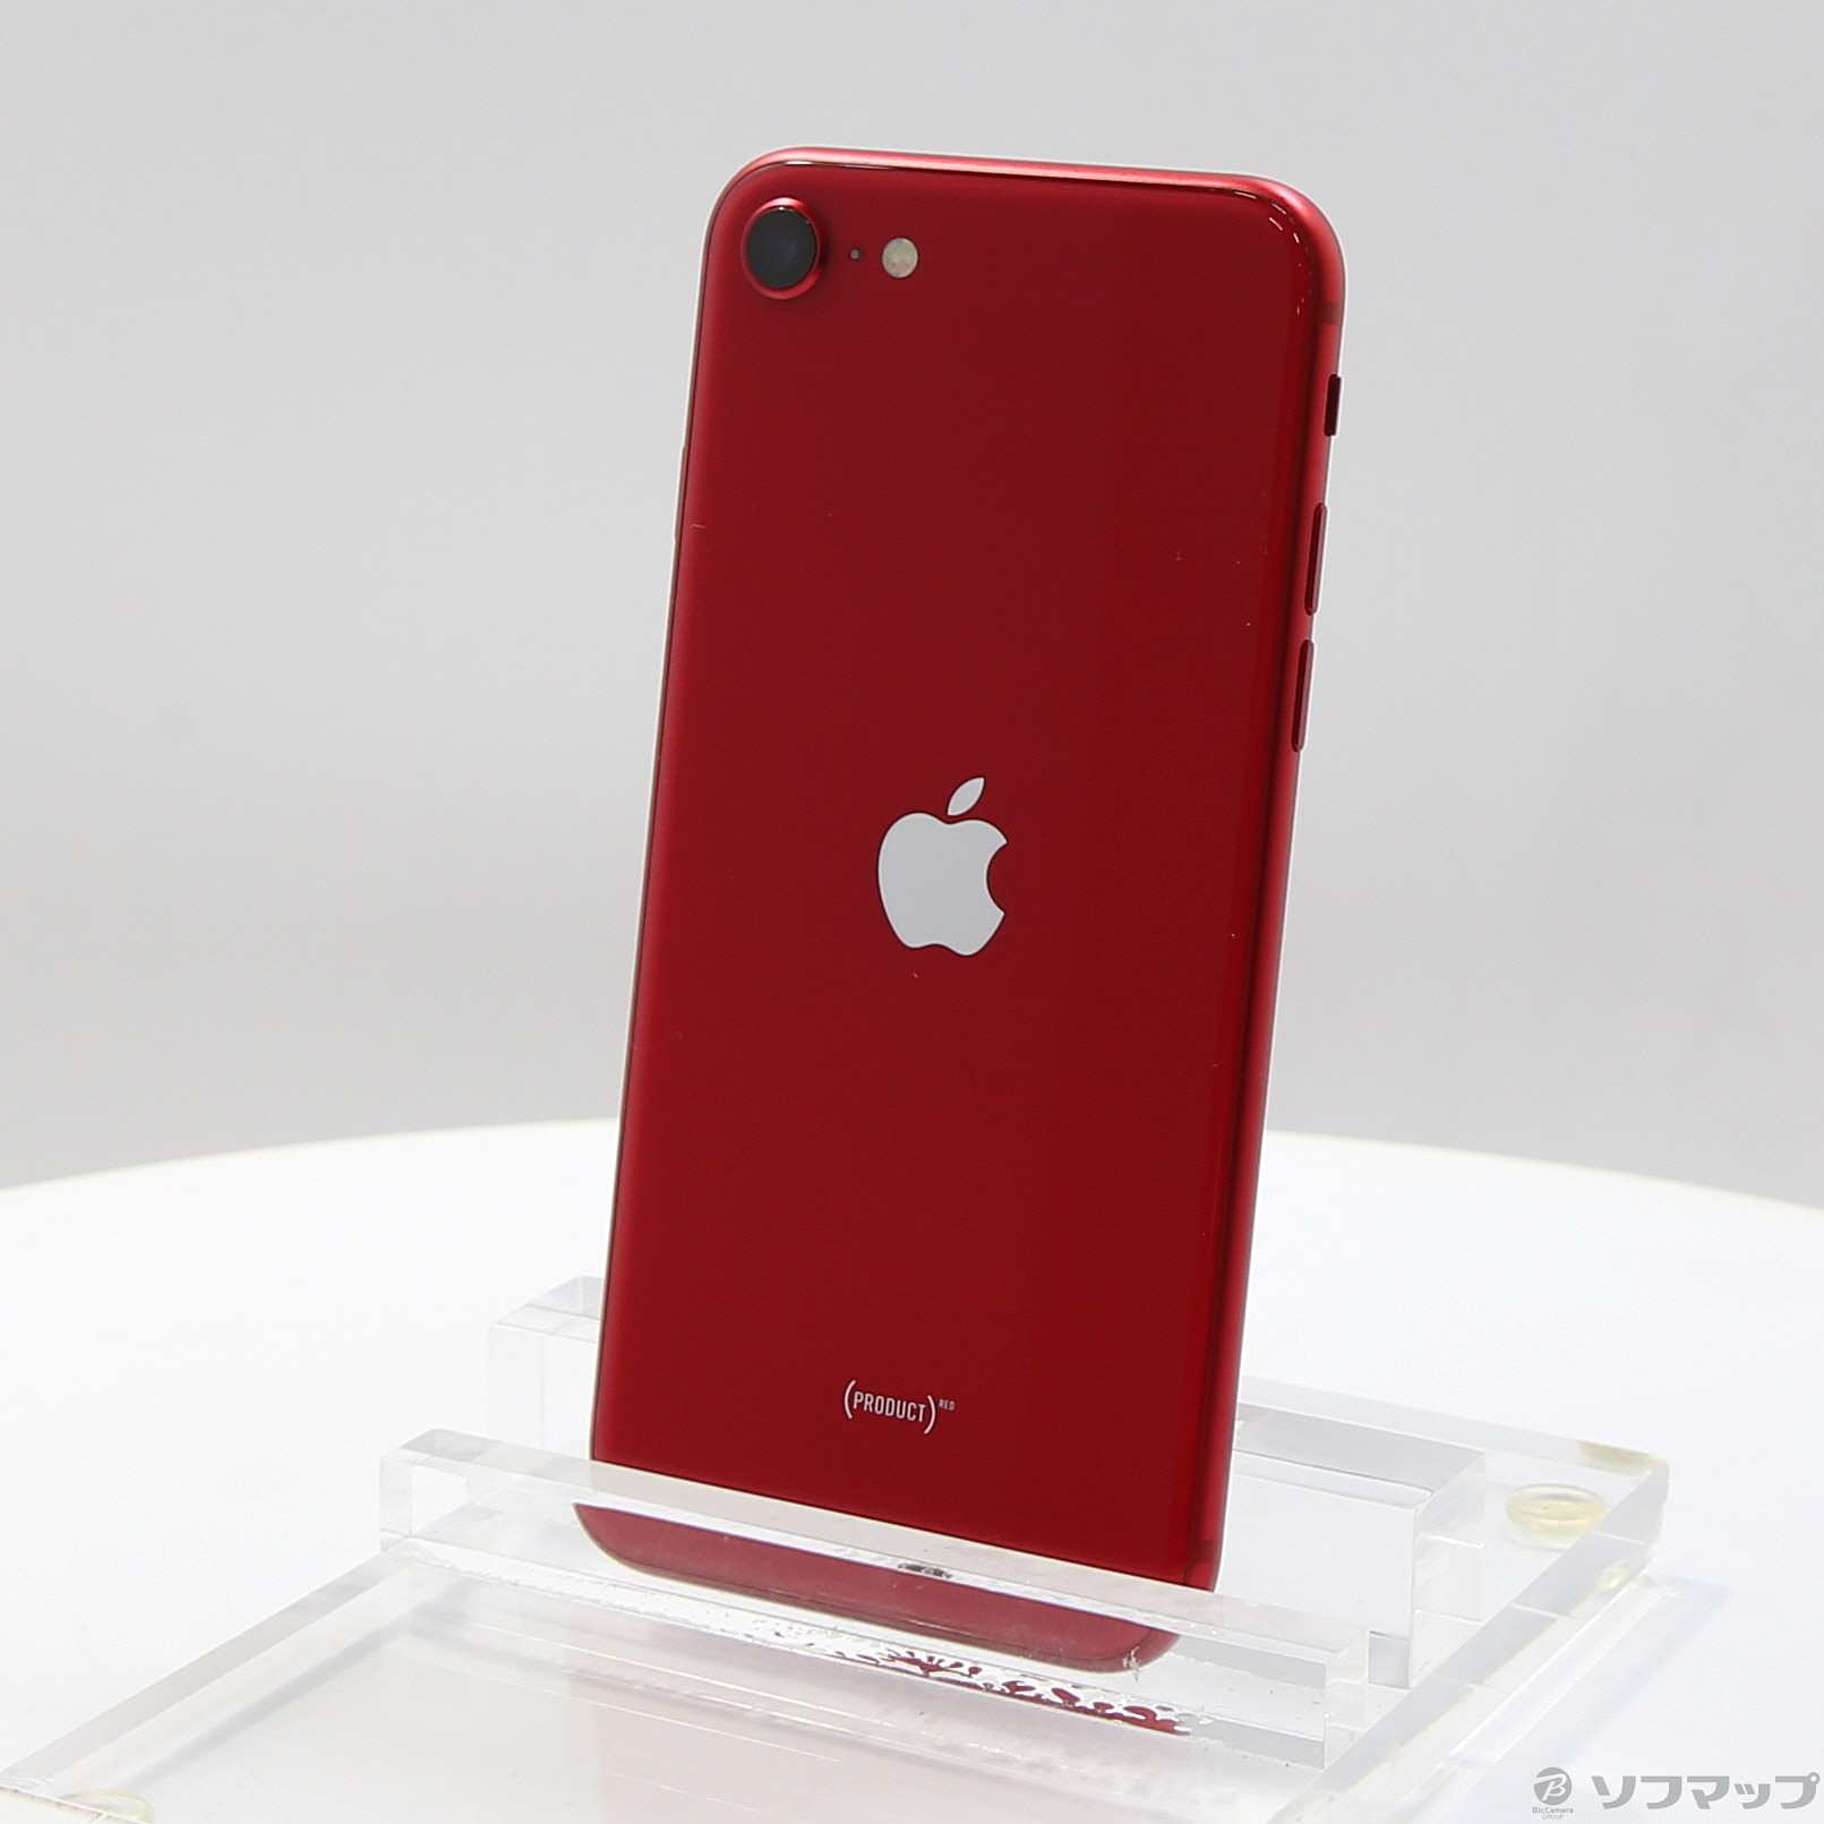 iPhone SE 64 GB RED